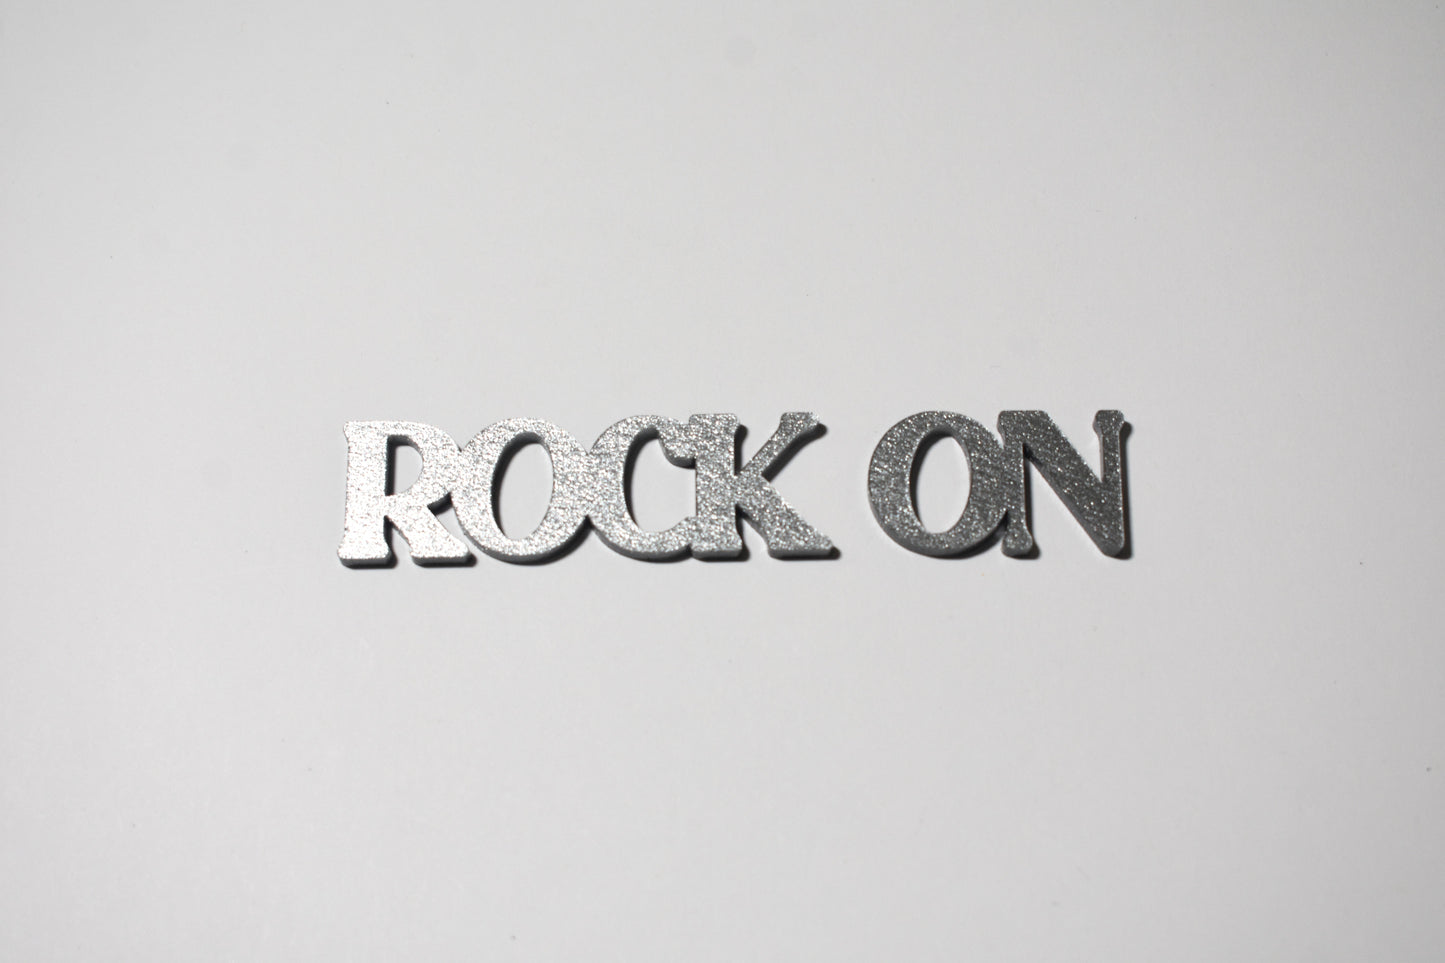 Rock on title - Creative Designs By Kari